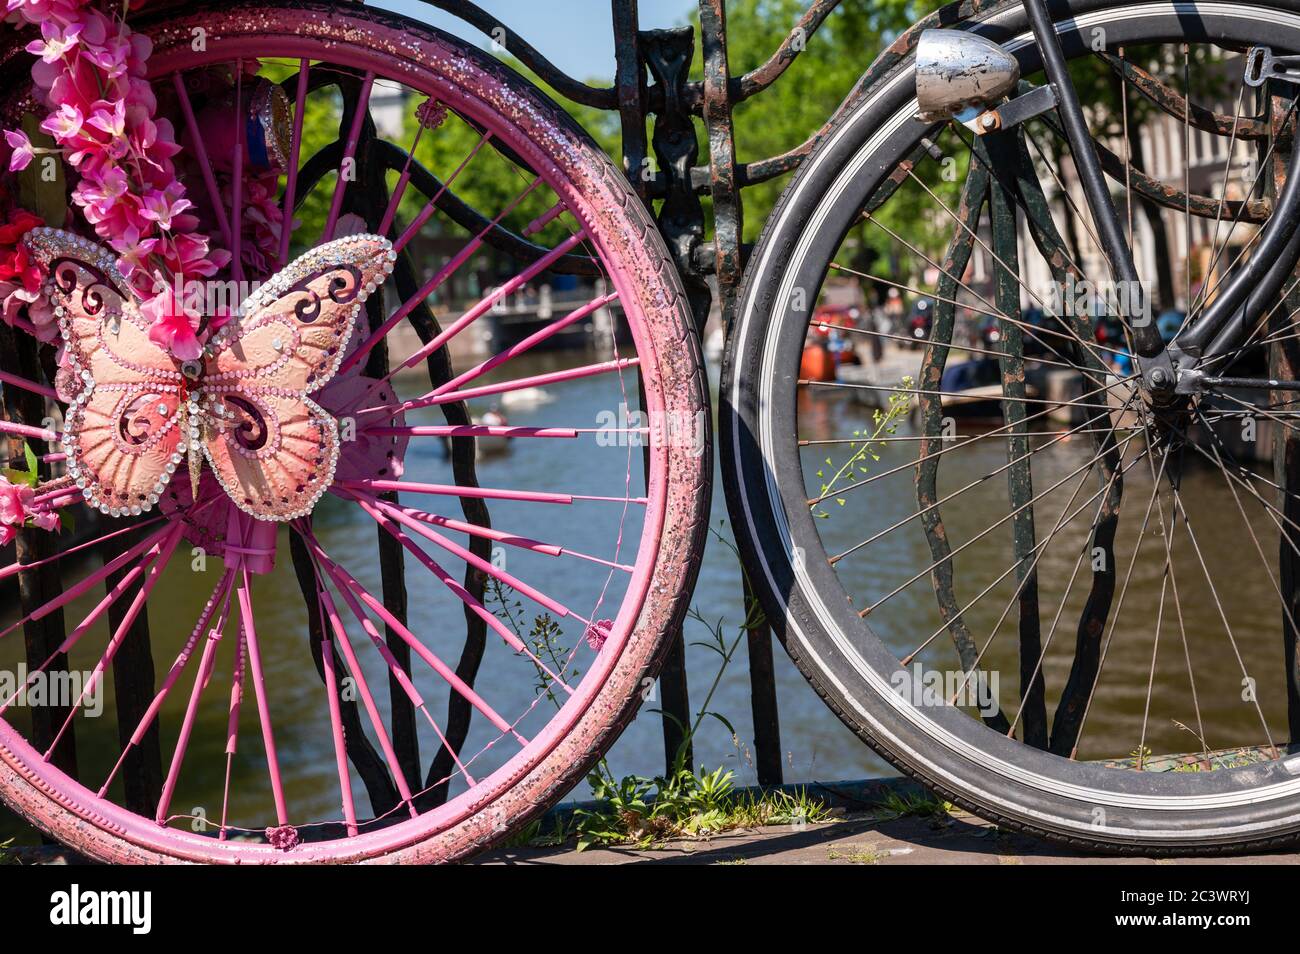 Decorated Bike Pink Flowers Immagini e Fotos Stock - Alamy